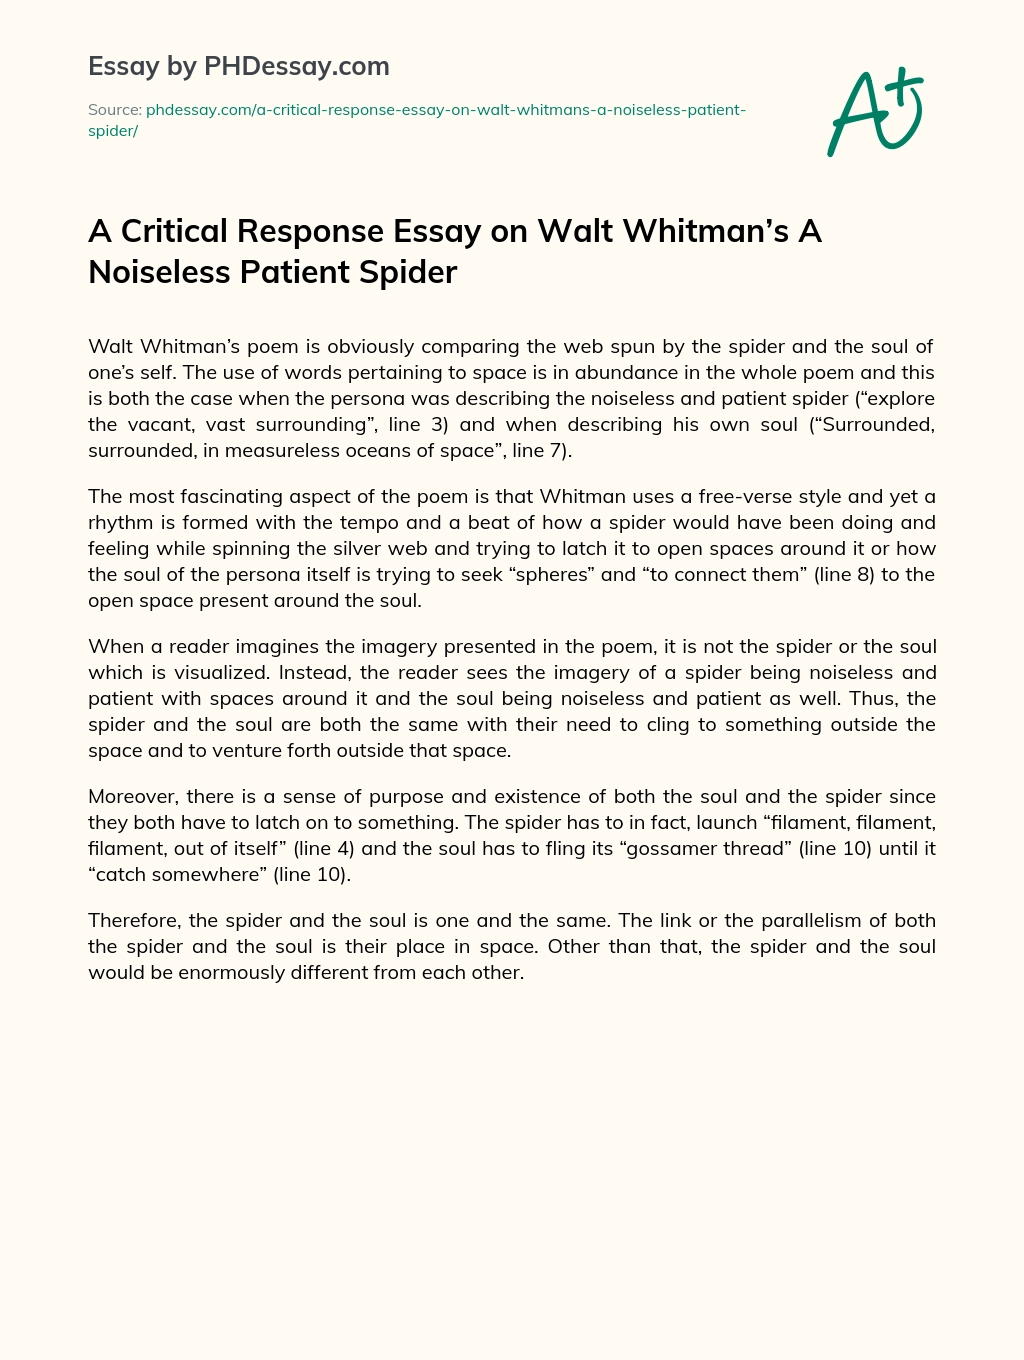 A Critical Response Essay on Walt Whitman’s A Noiseless Patient Spider essay